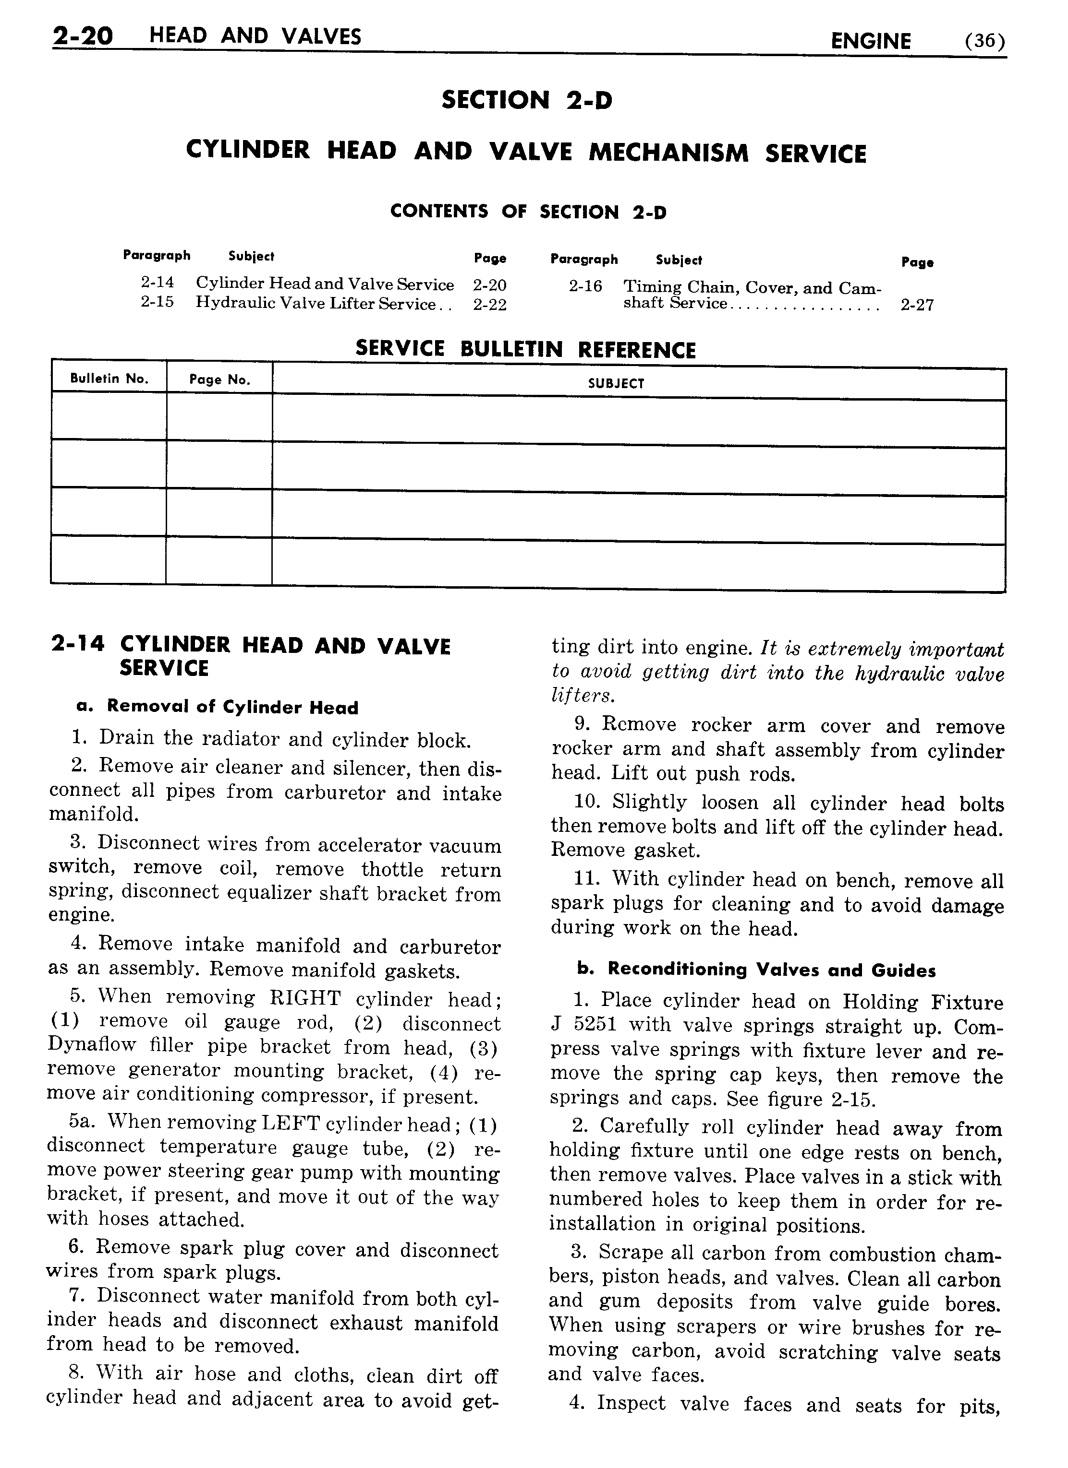 n_03 1954 Buick Shop Manual - Engine-020-020.jpg